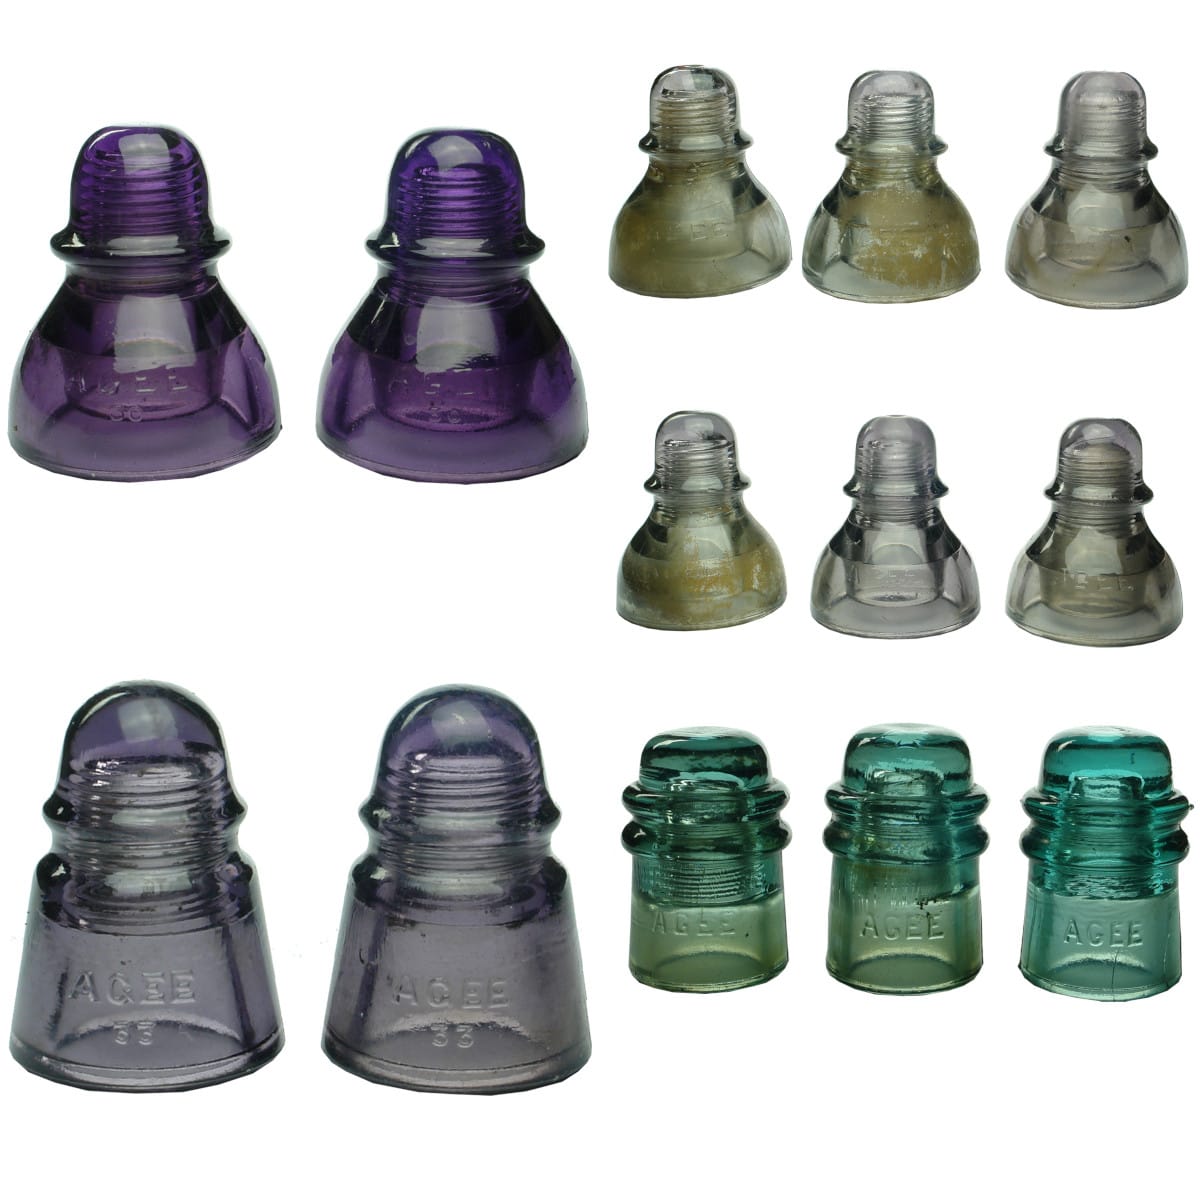 13 various sun coloured purple glass AGEE insulators